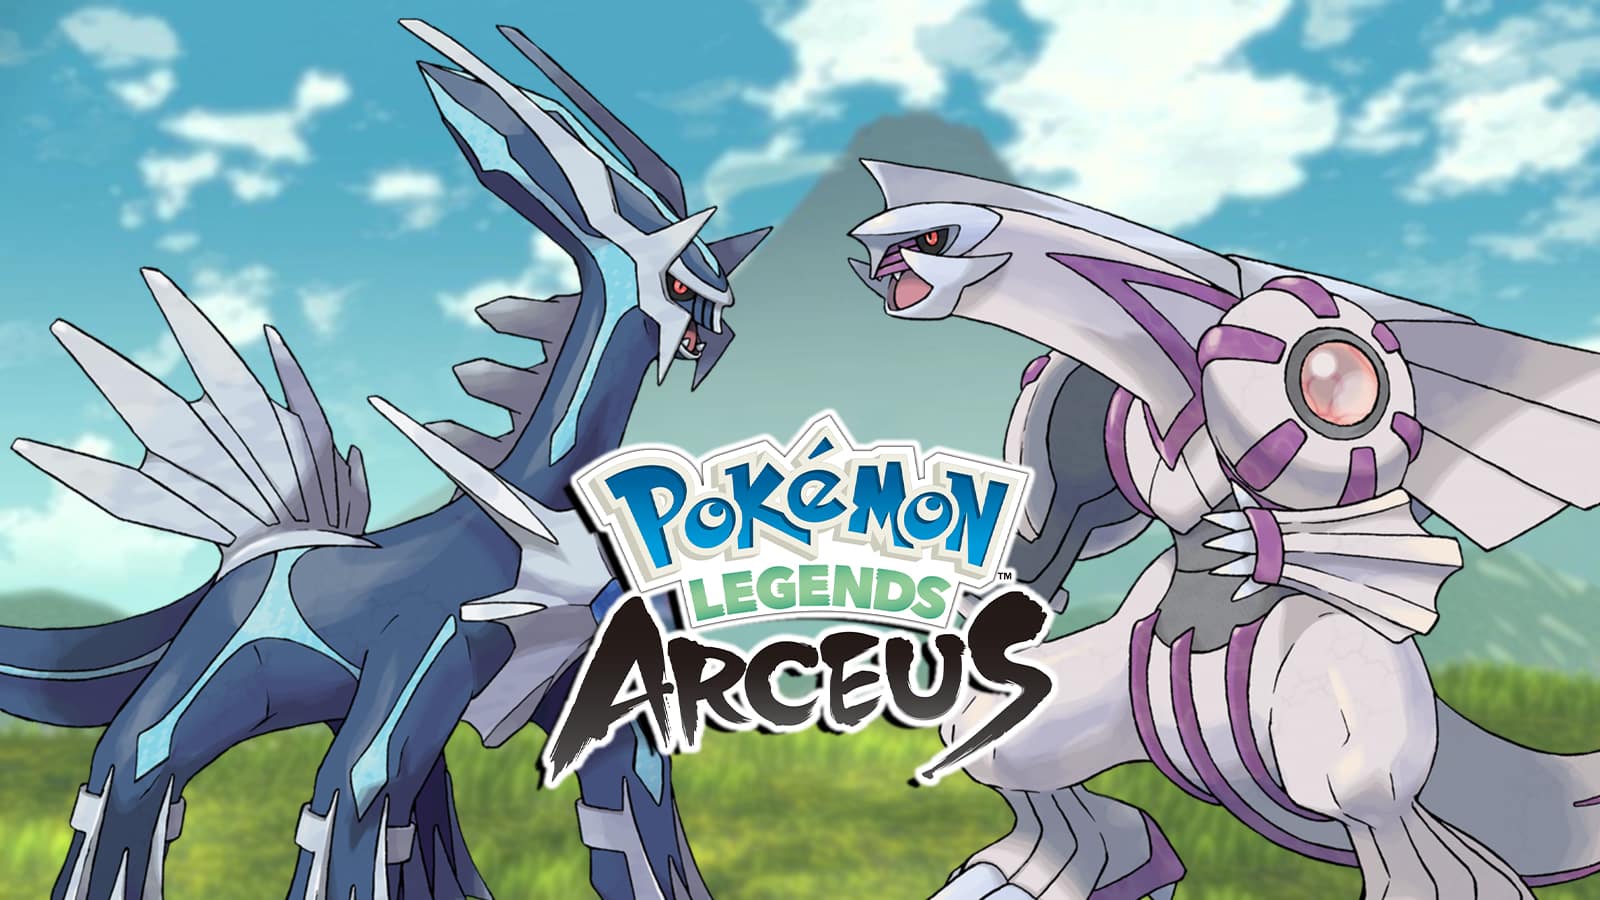 Arceus - Pokemon Deluge Legends